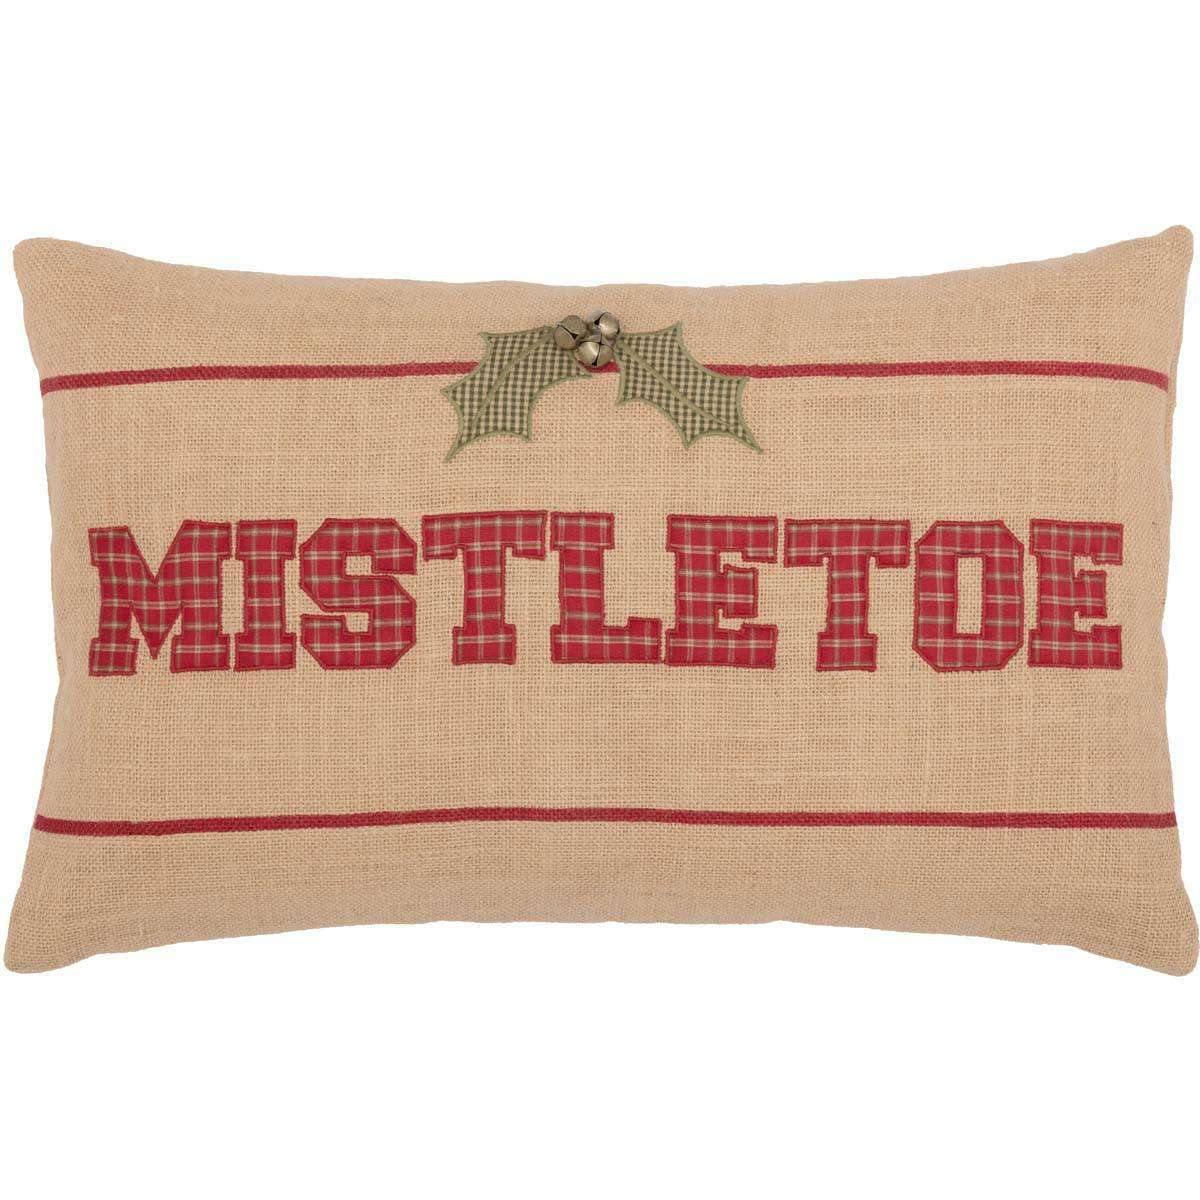 Mistletoe Pillow 14x22 - The Fox Decor